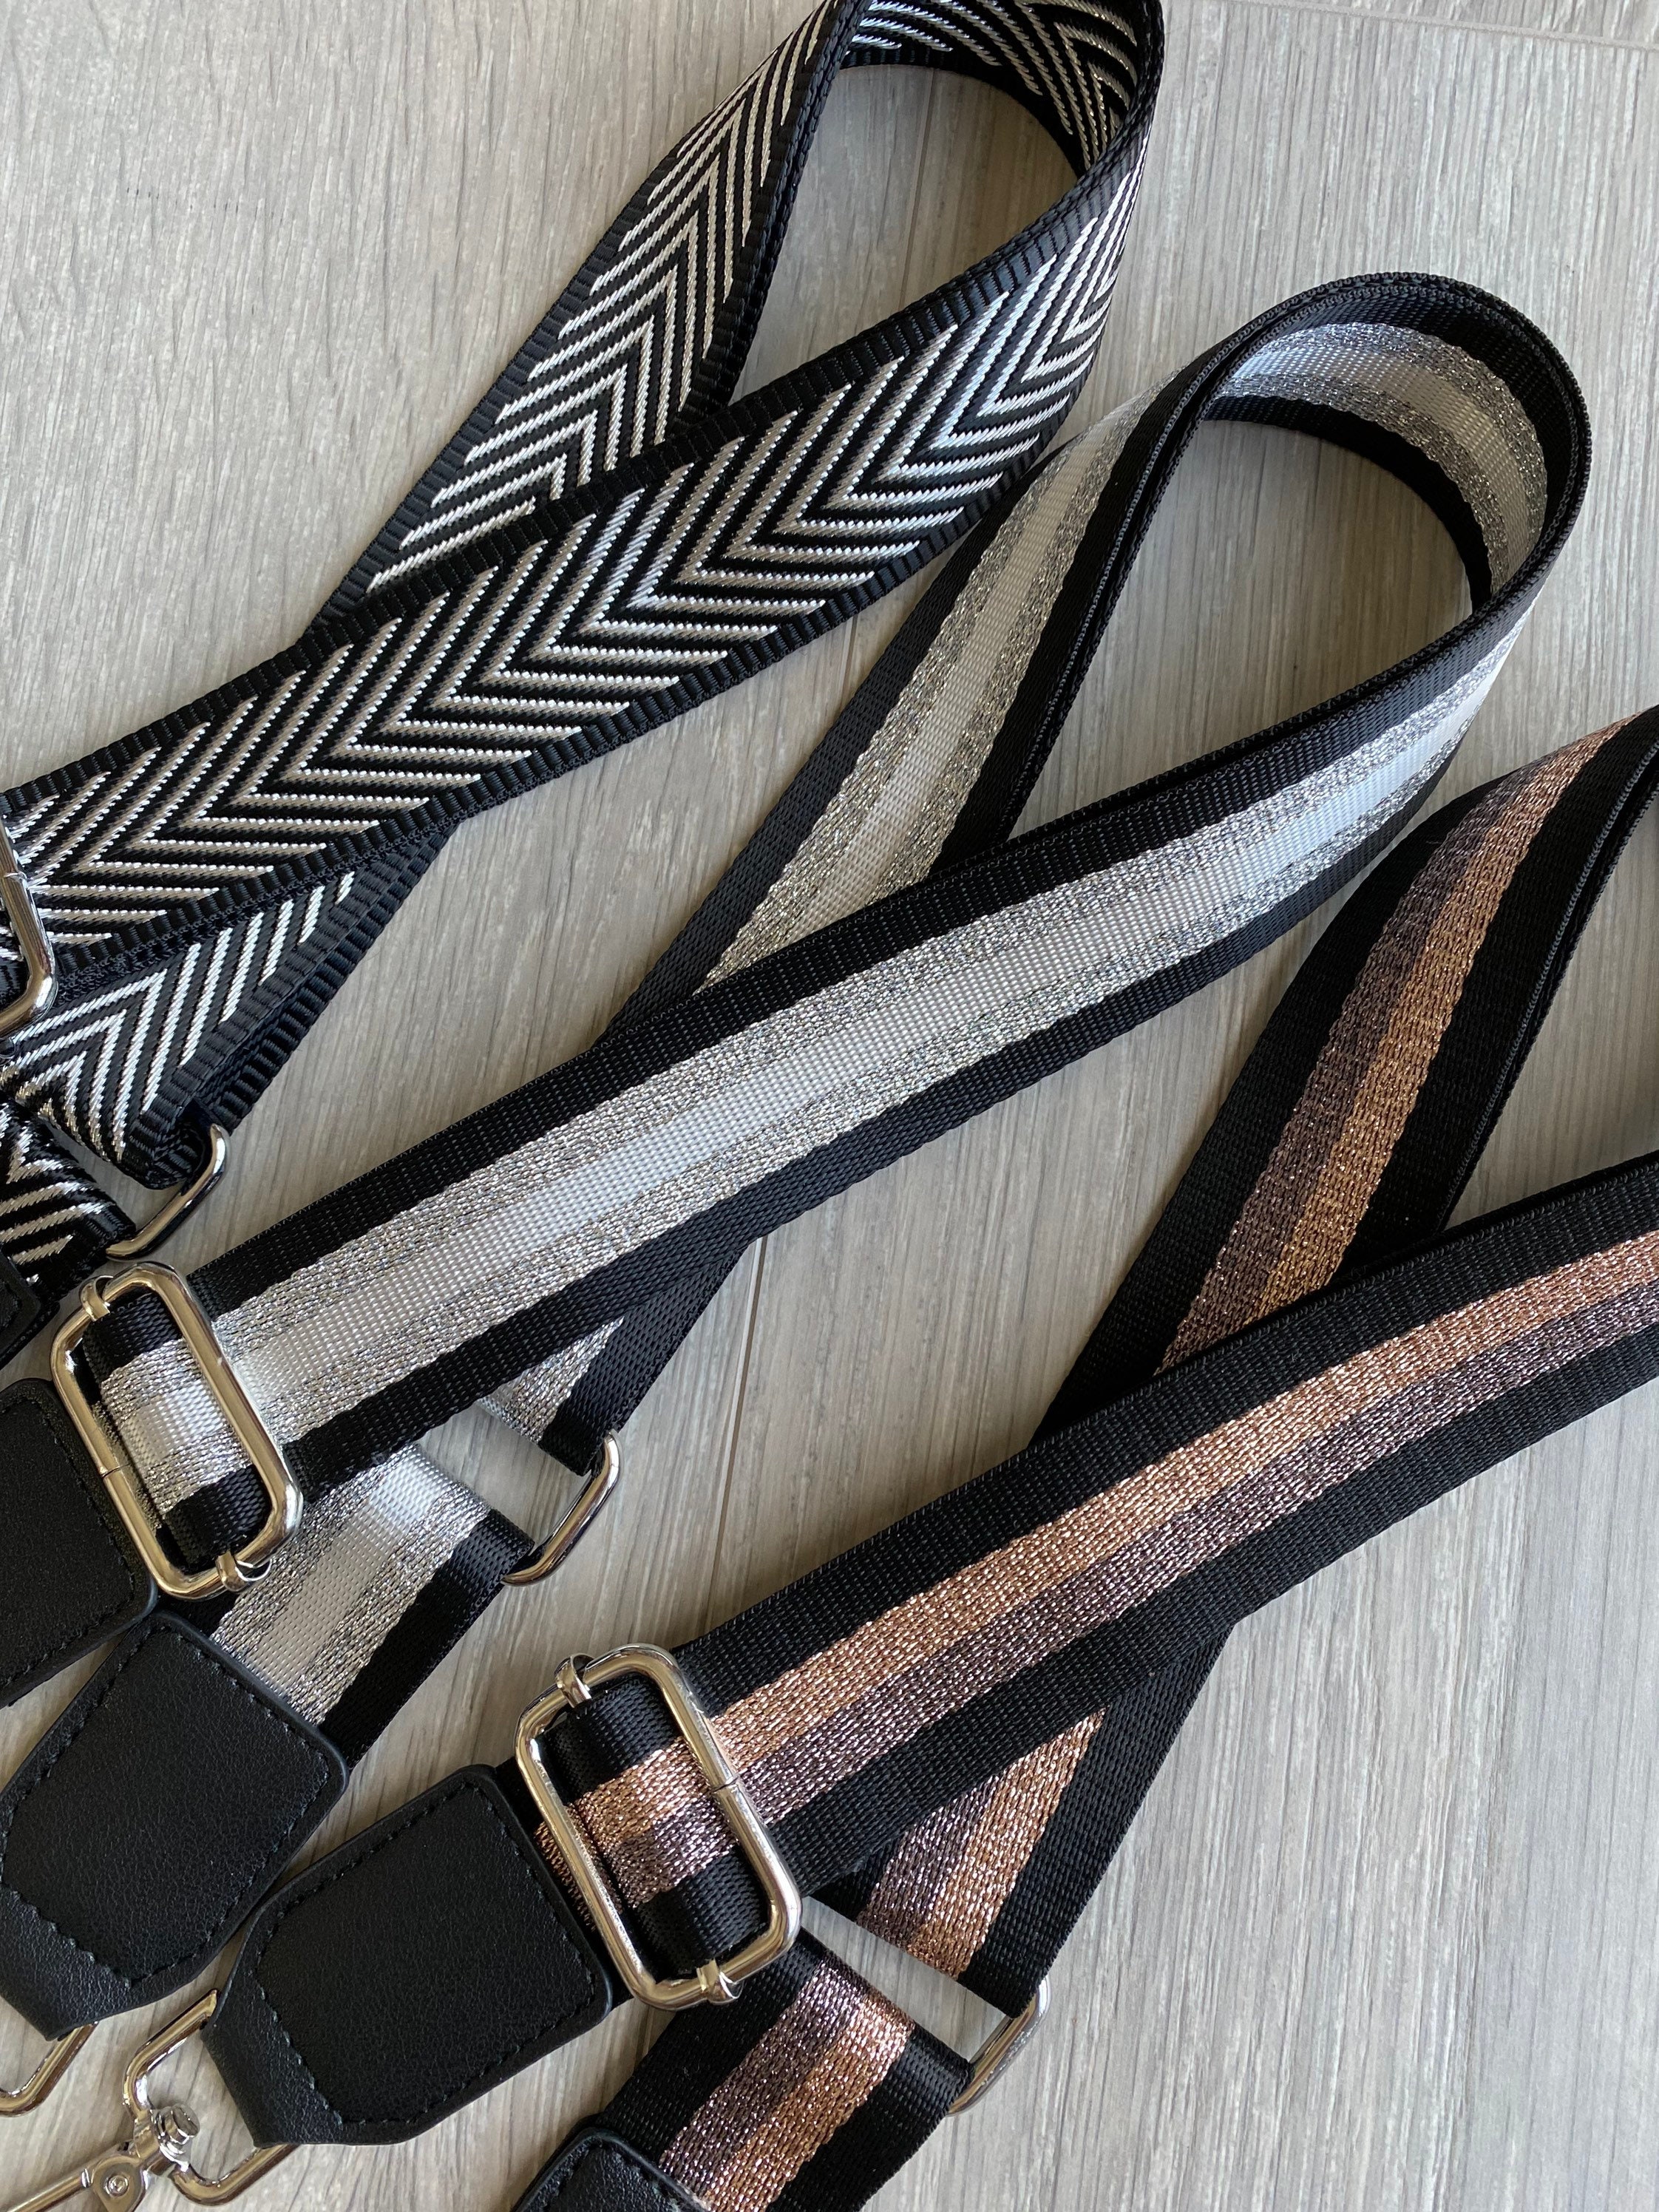 Black & Silver Canvas Bag Strap, Replacement Bag Strap, Stripe Print Bag Strap, Adjustable Handbag Strap, Silver Hardware Bag Strap